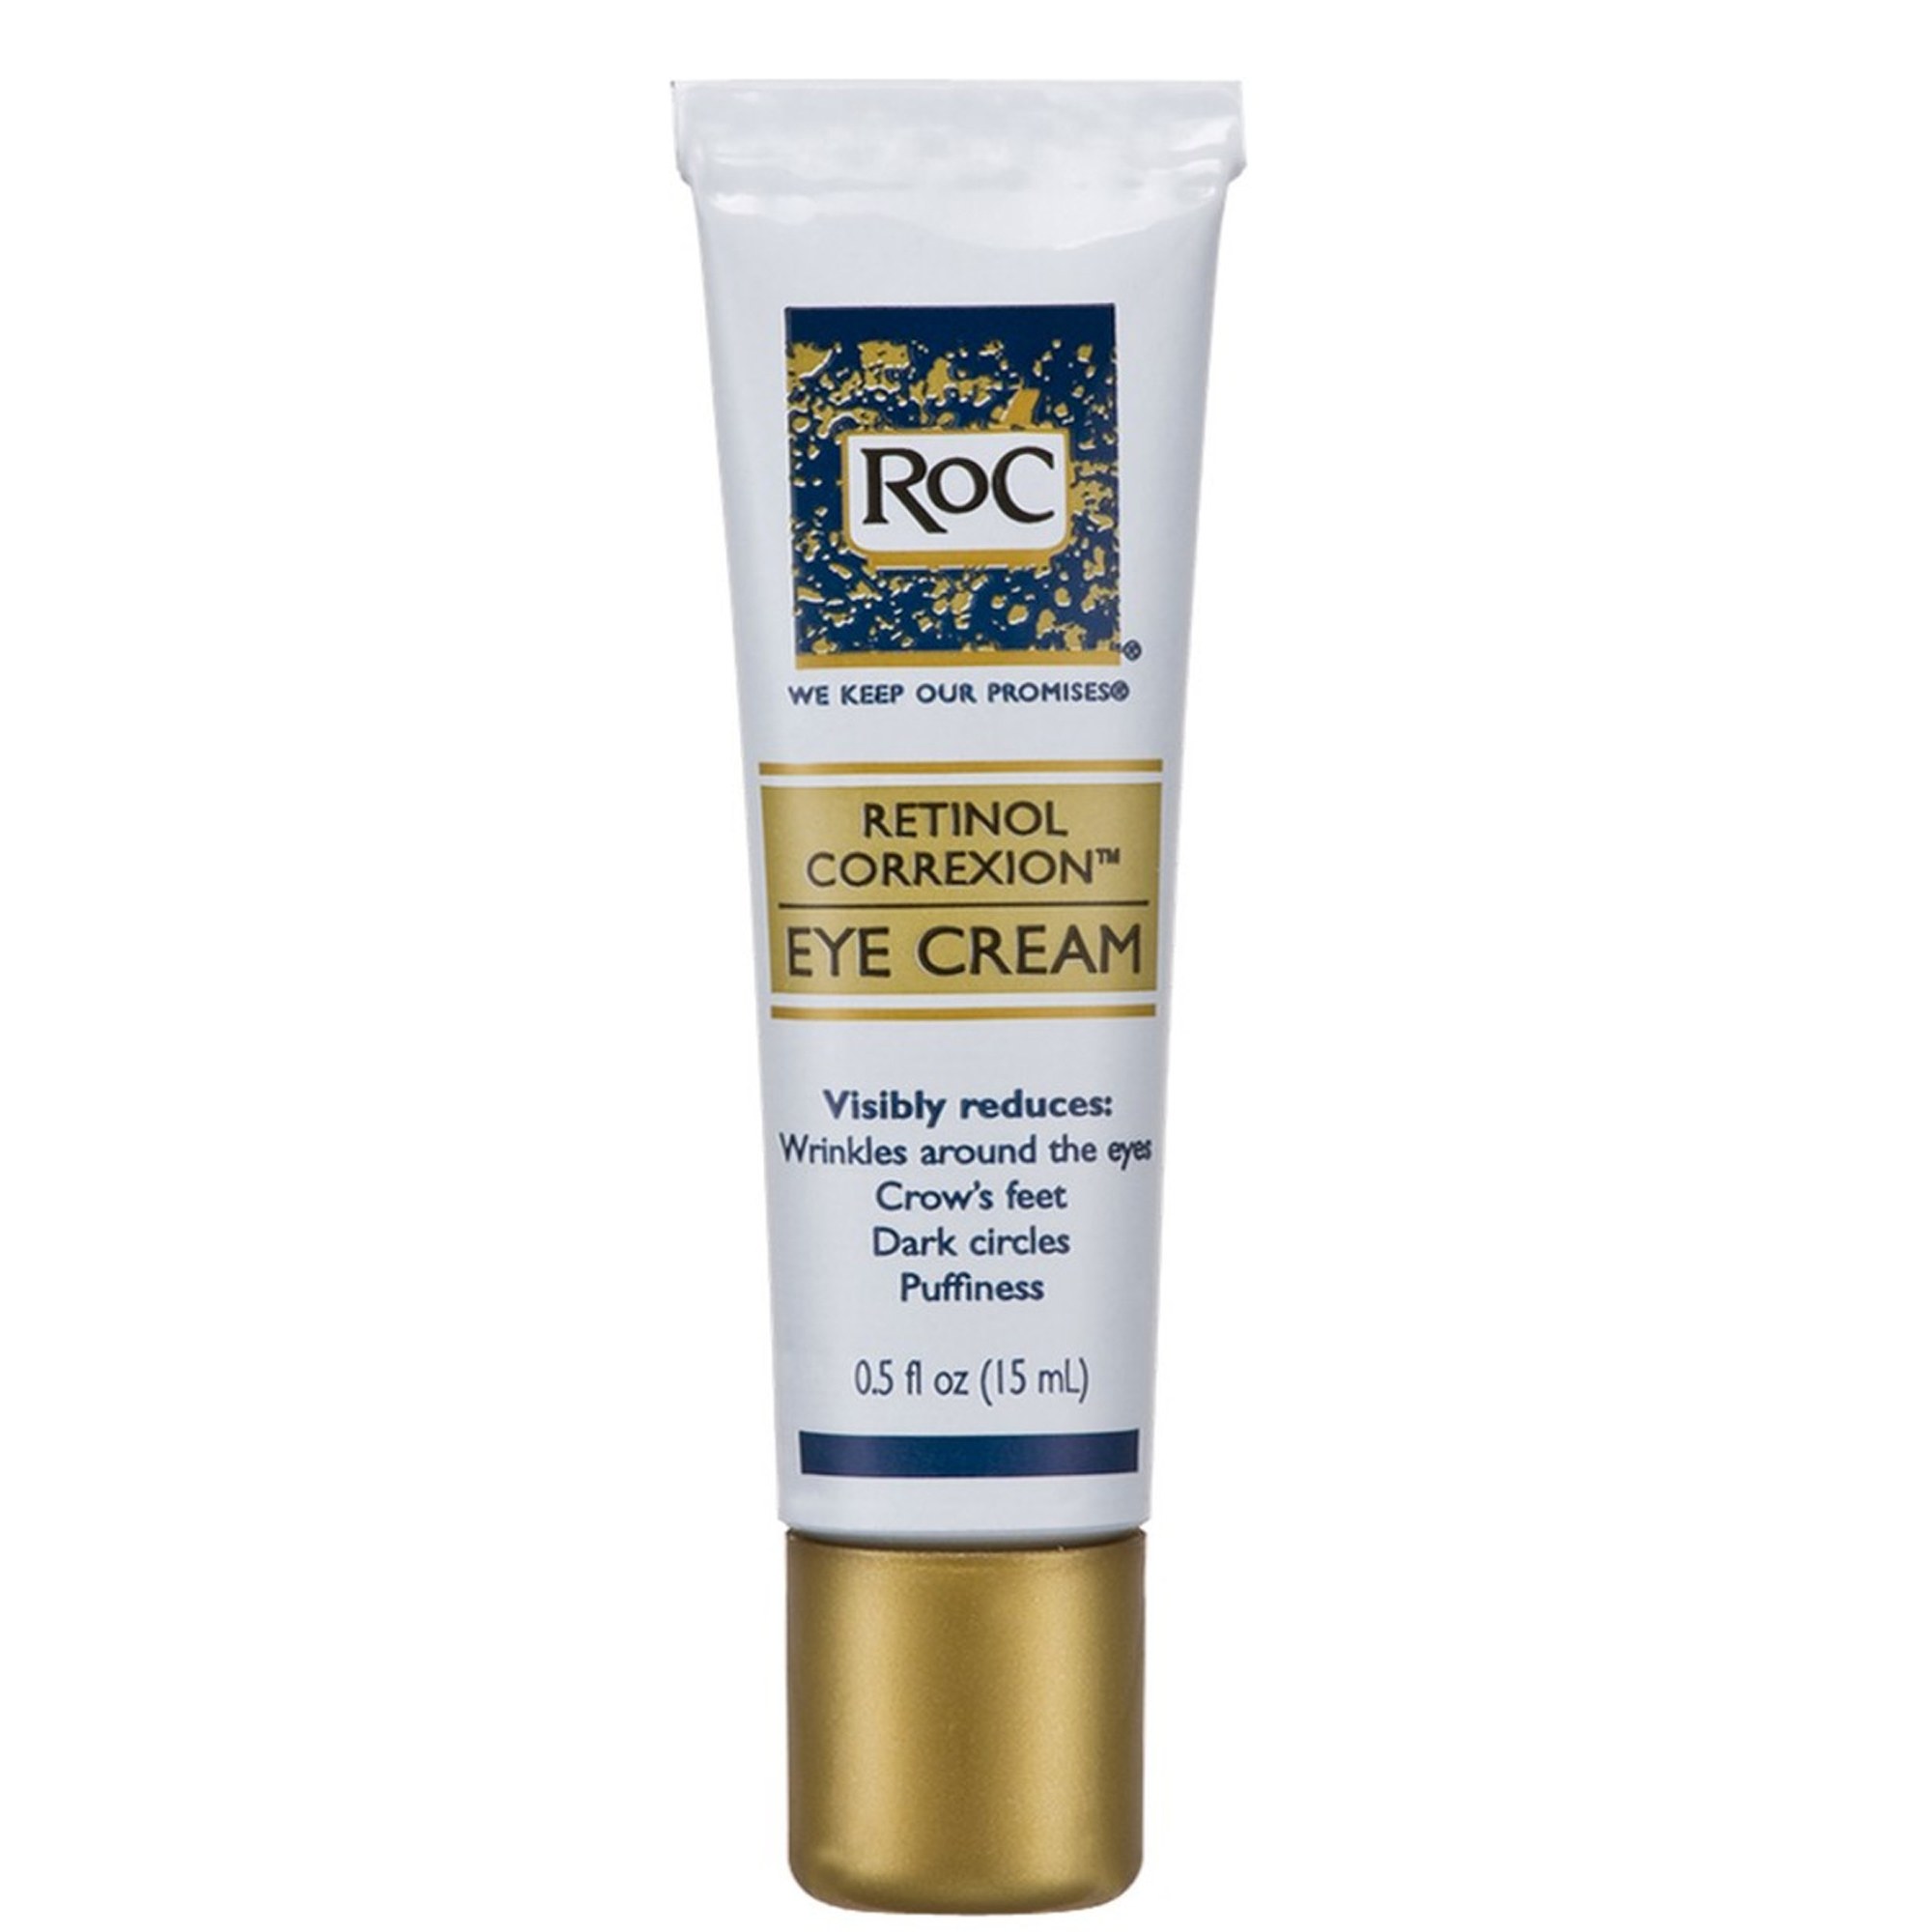  RoC Retinol Correxion Eye Cream